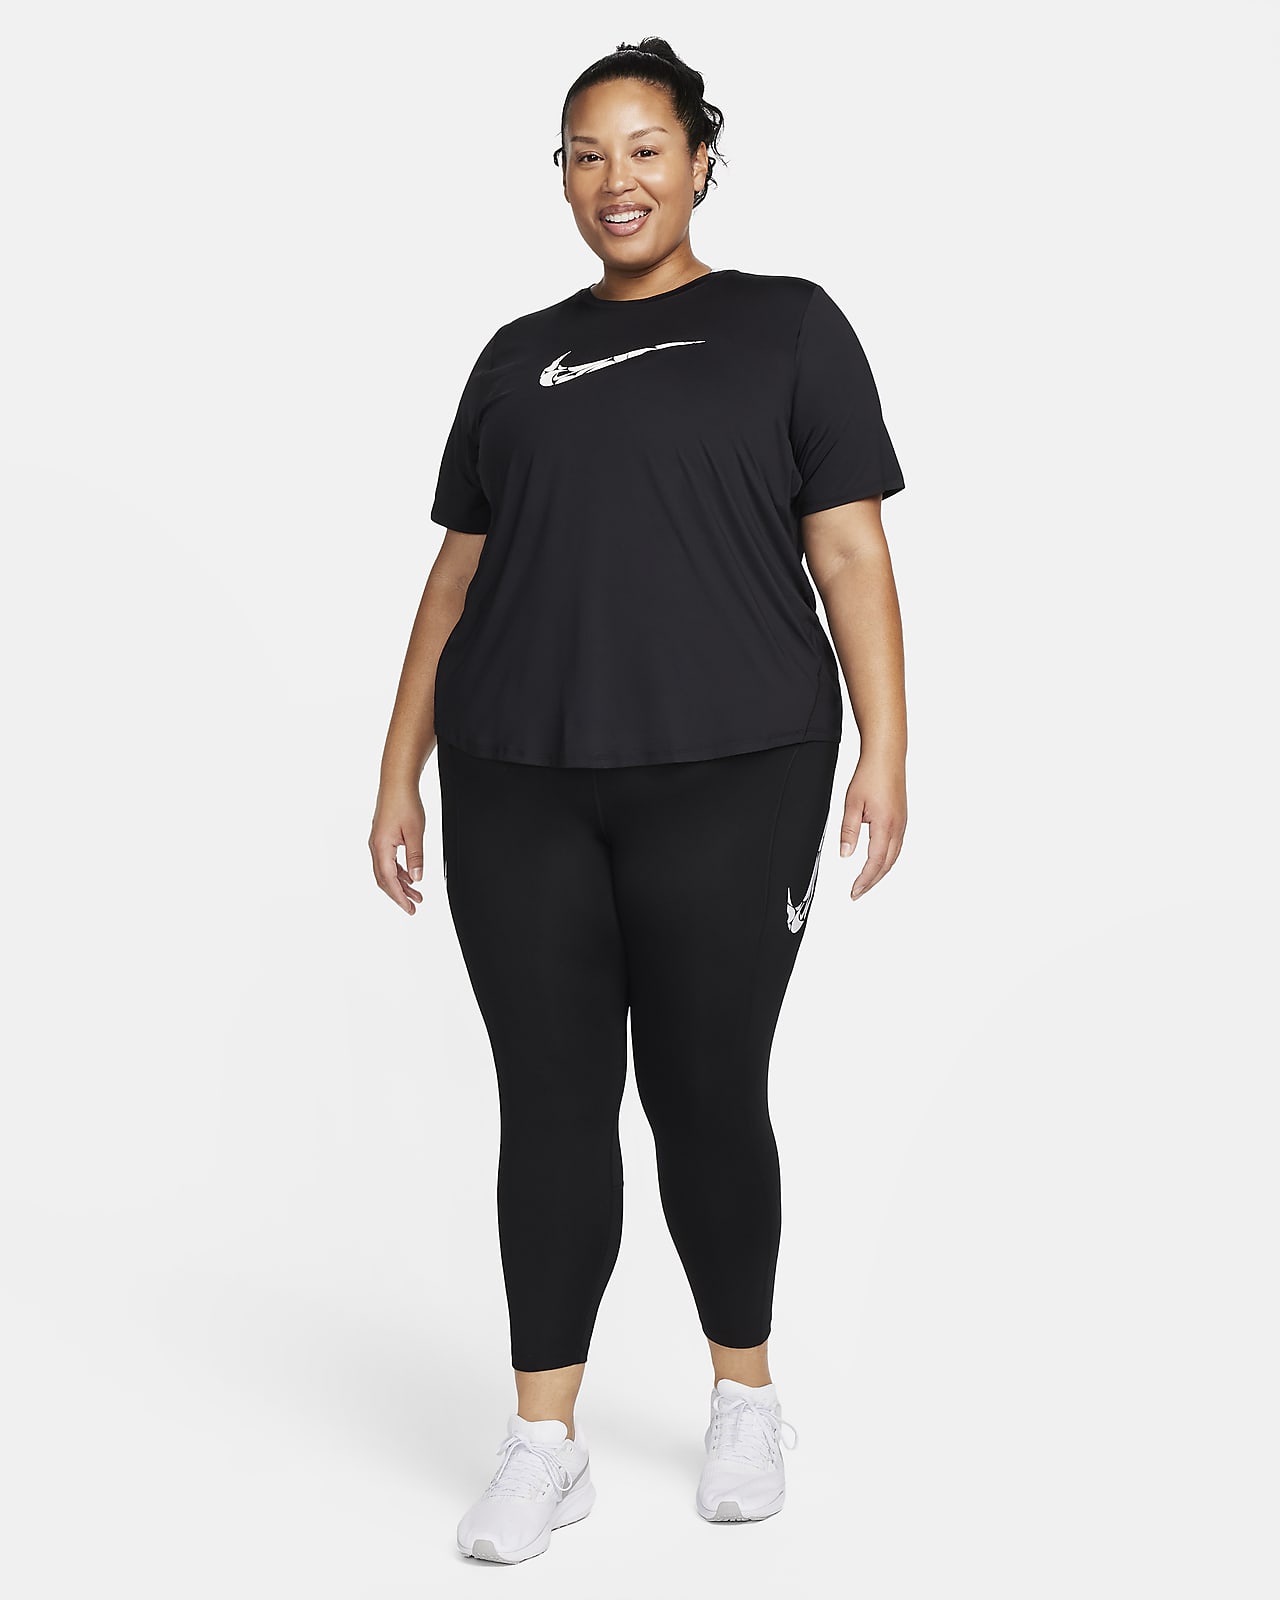 Nike Women's Dry Legend Training Tee Gray Size X-Small – Tuesday